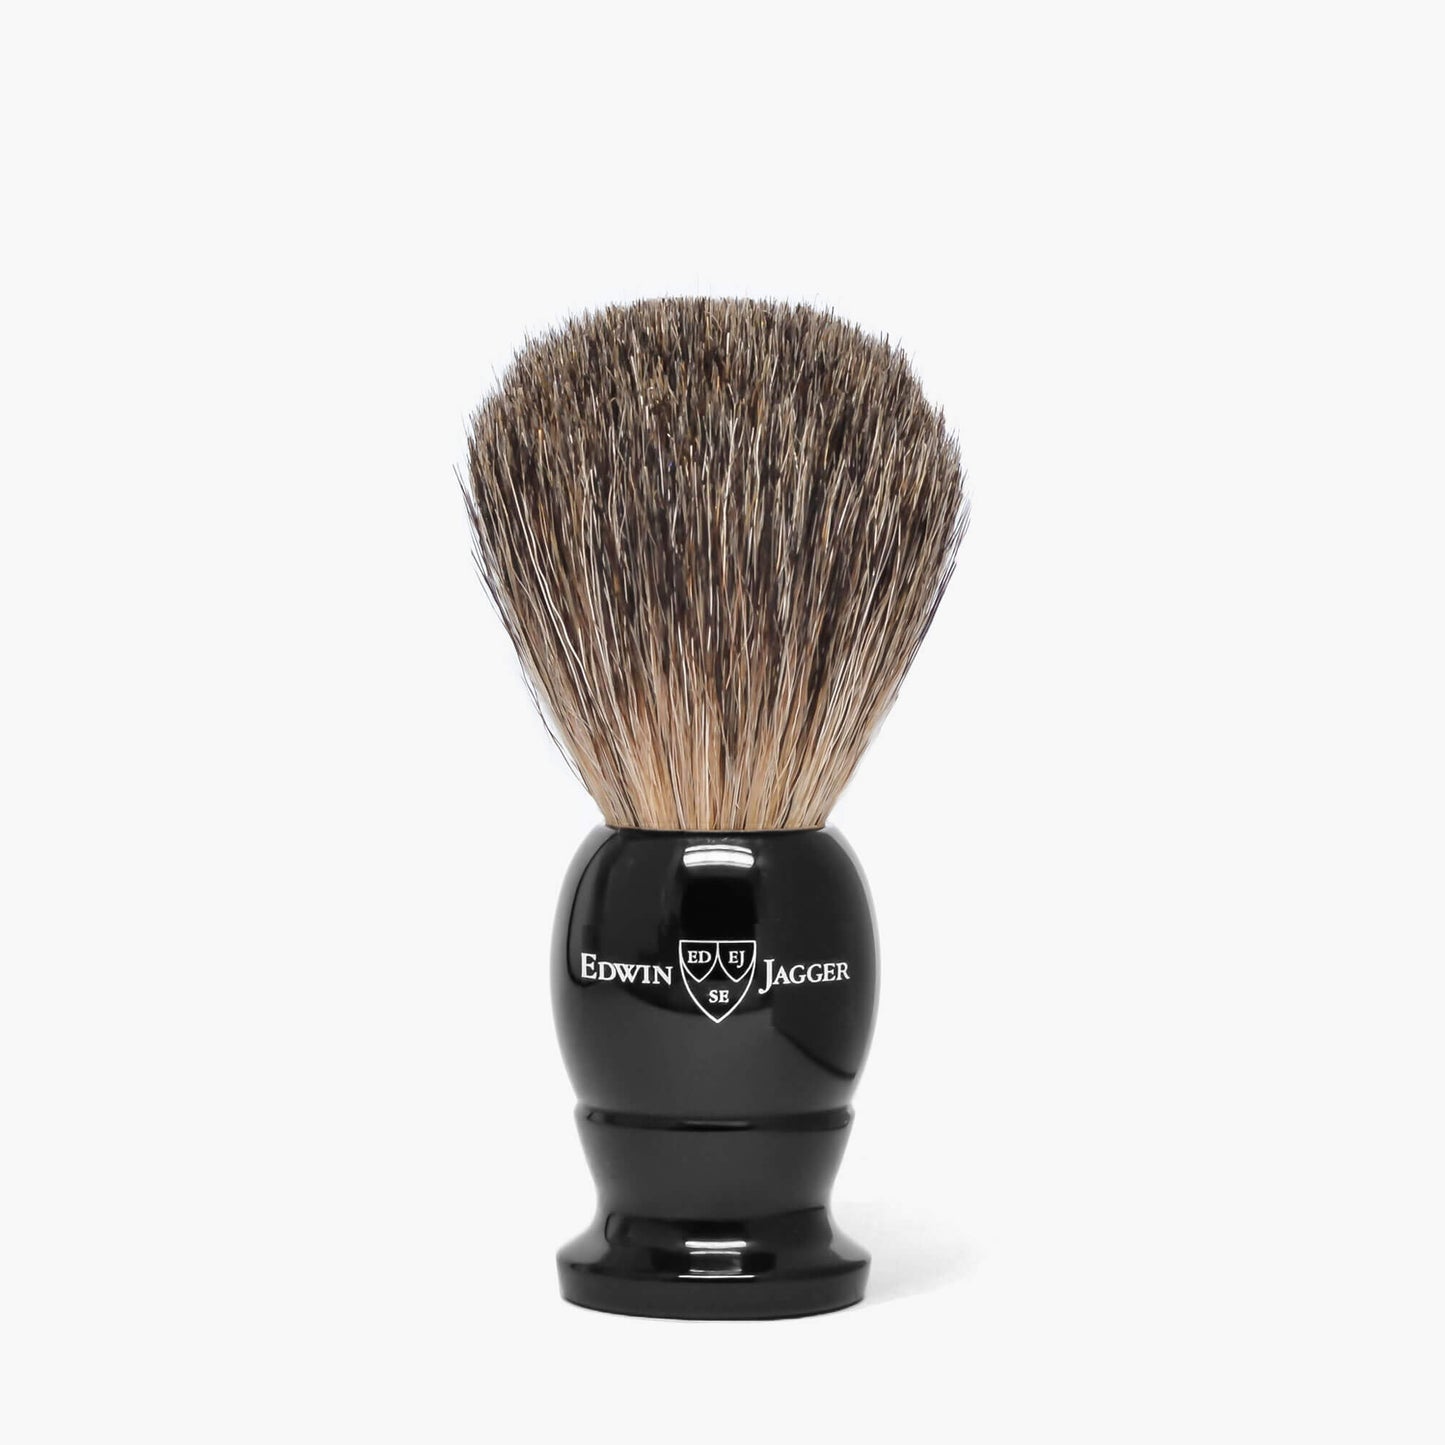 Edwin Jagger Small Best Badger Shaving Brush With Black Handle